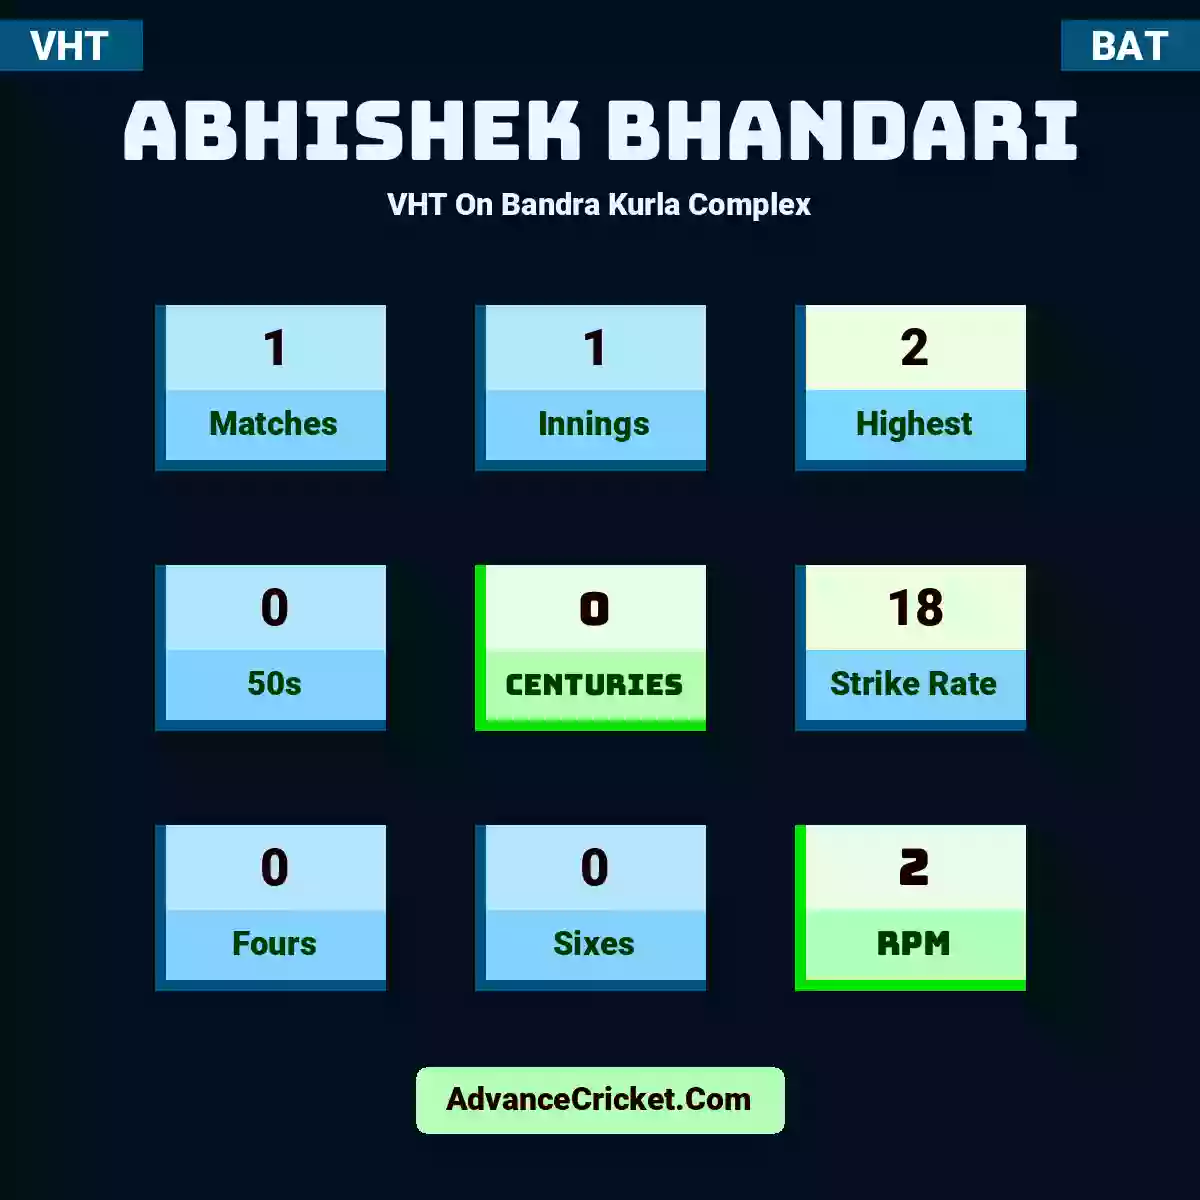 Abhishek Bhandari VHT  On Bandra Kurla Complex, Abhishek Bhandari played 1 matches, scored 2 runs as highest, 0 half-centuries, and 0 centuries, with a strike rate of 18. A.Bhandari hit 0 fours and 0 sixes, with an RPM of 2.